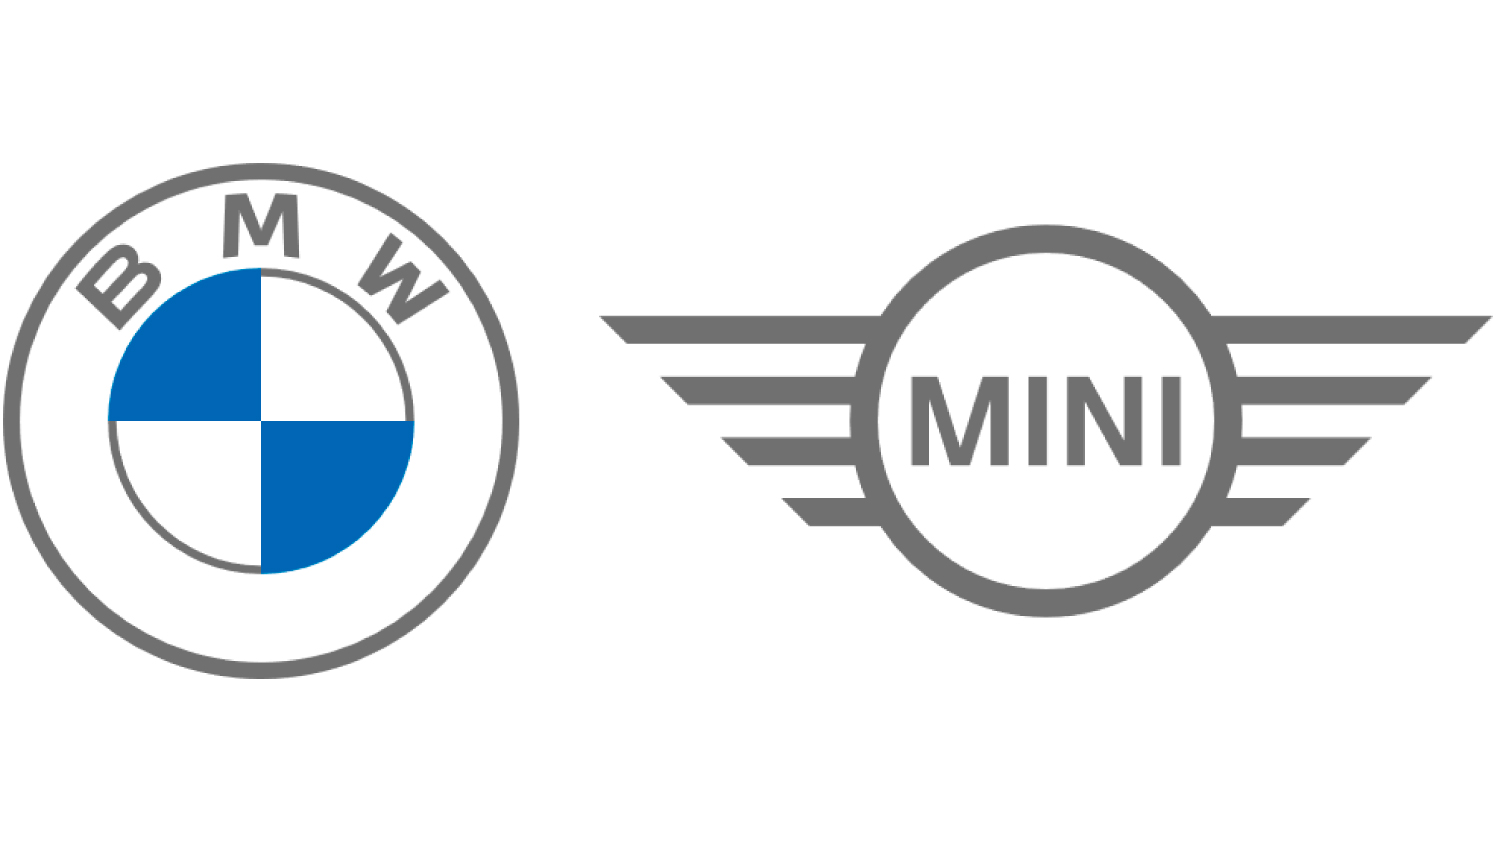 BMW and MINI logo image